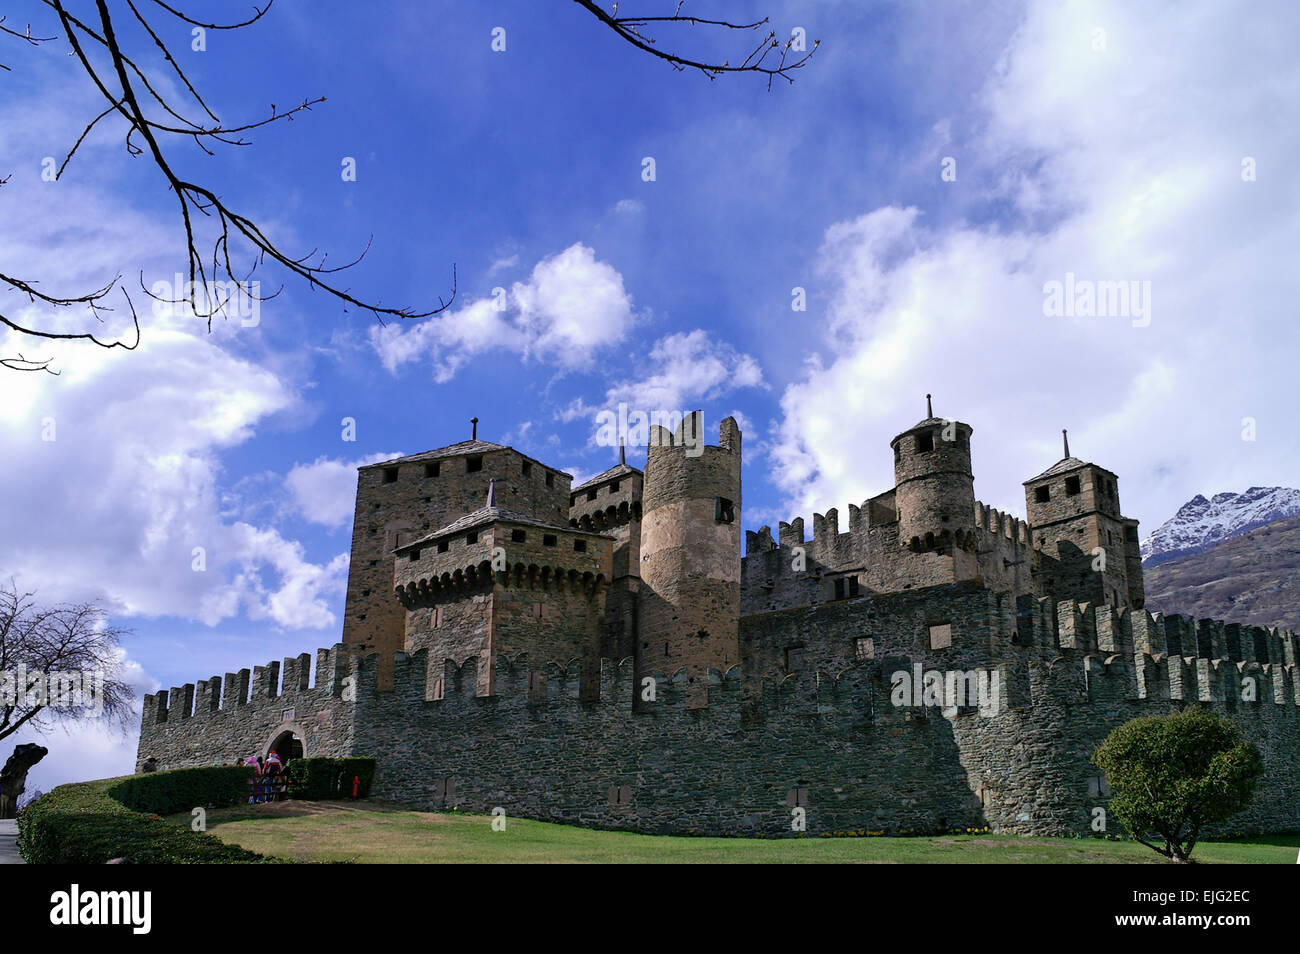 Fenis castle - Aosta - Italy Stock Photo